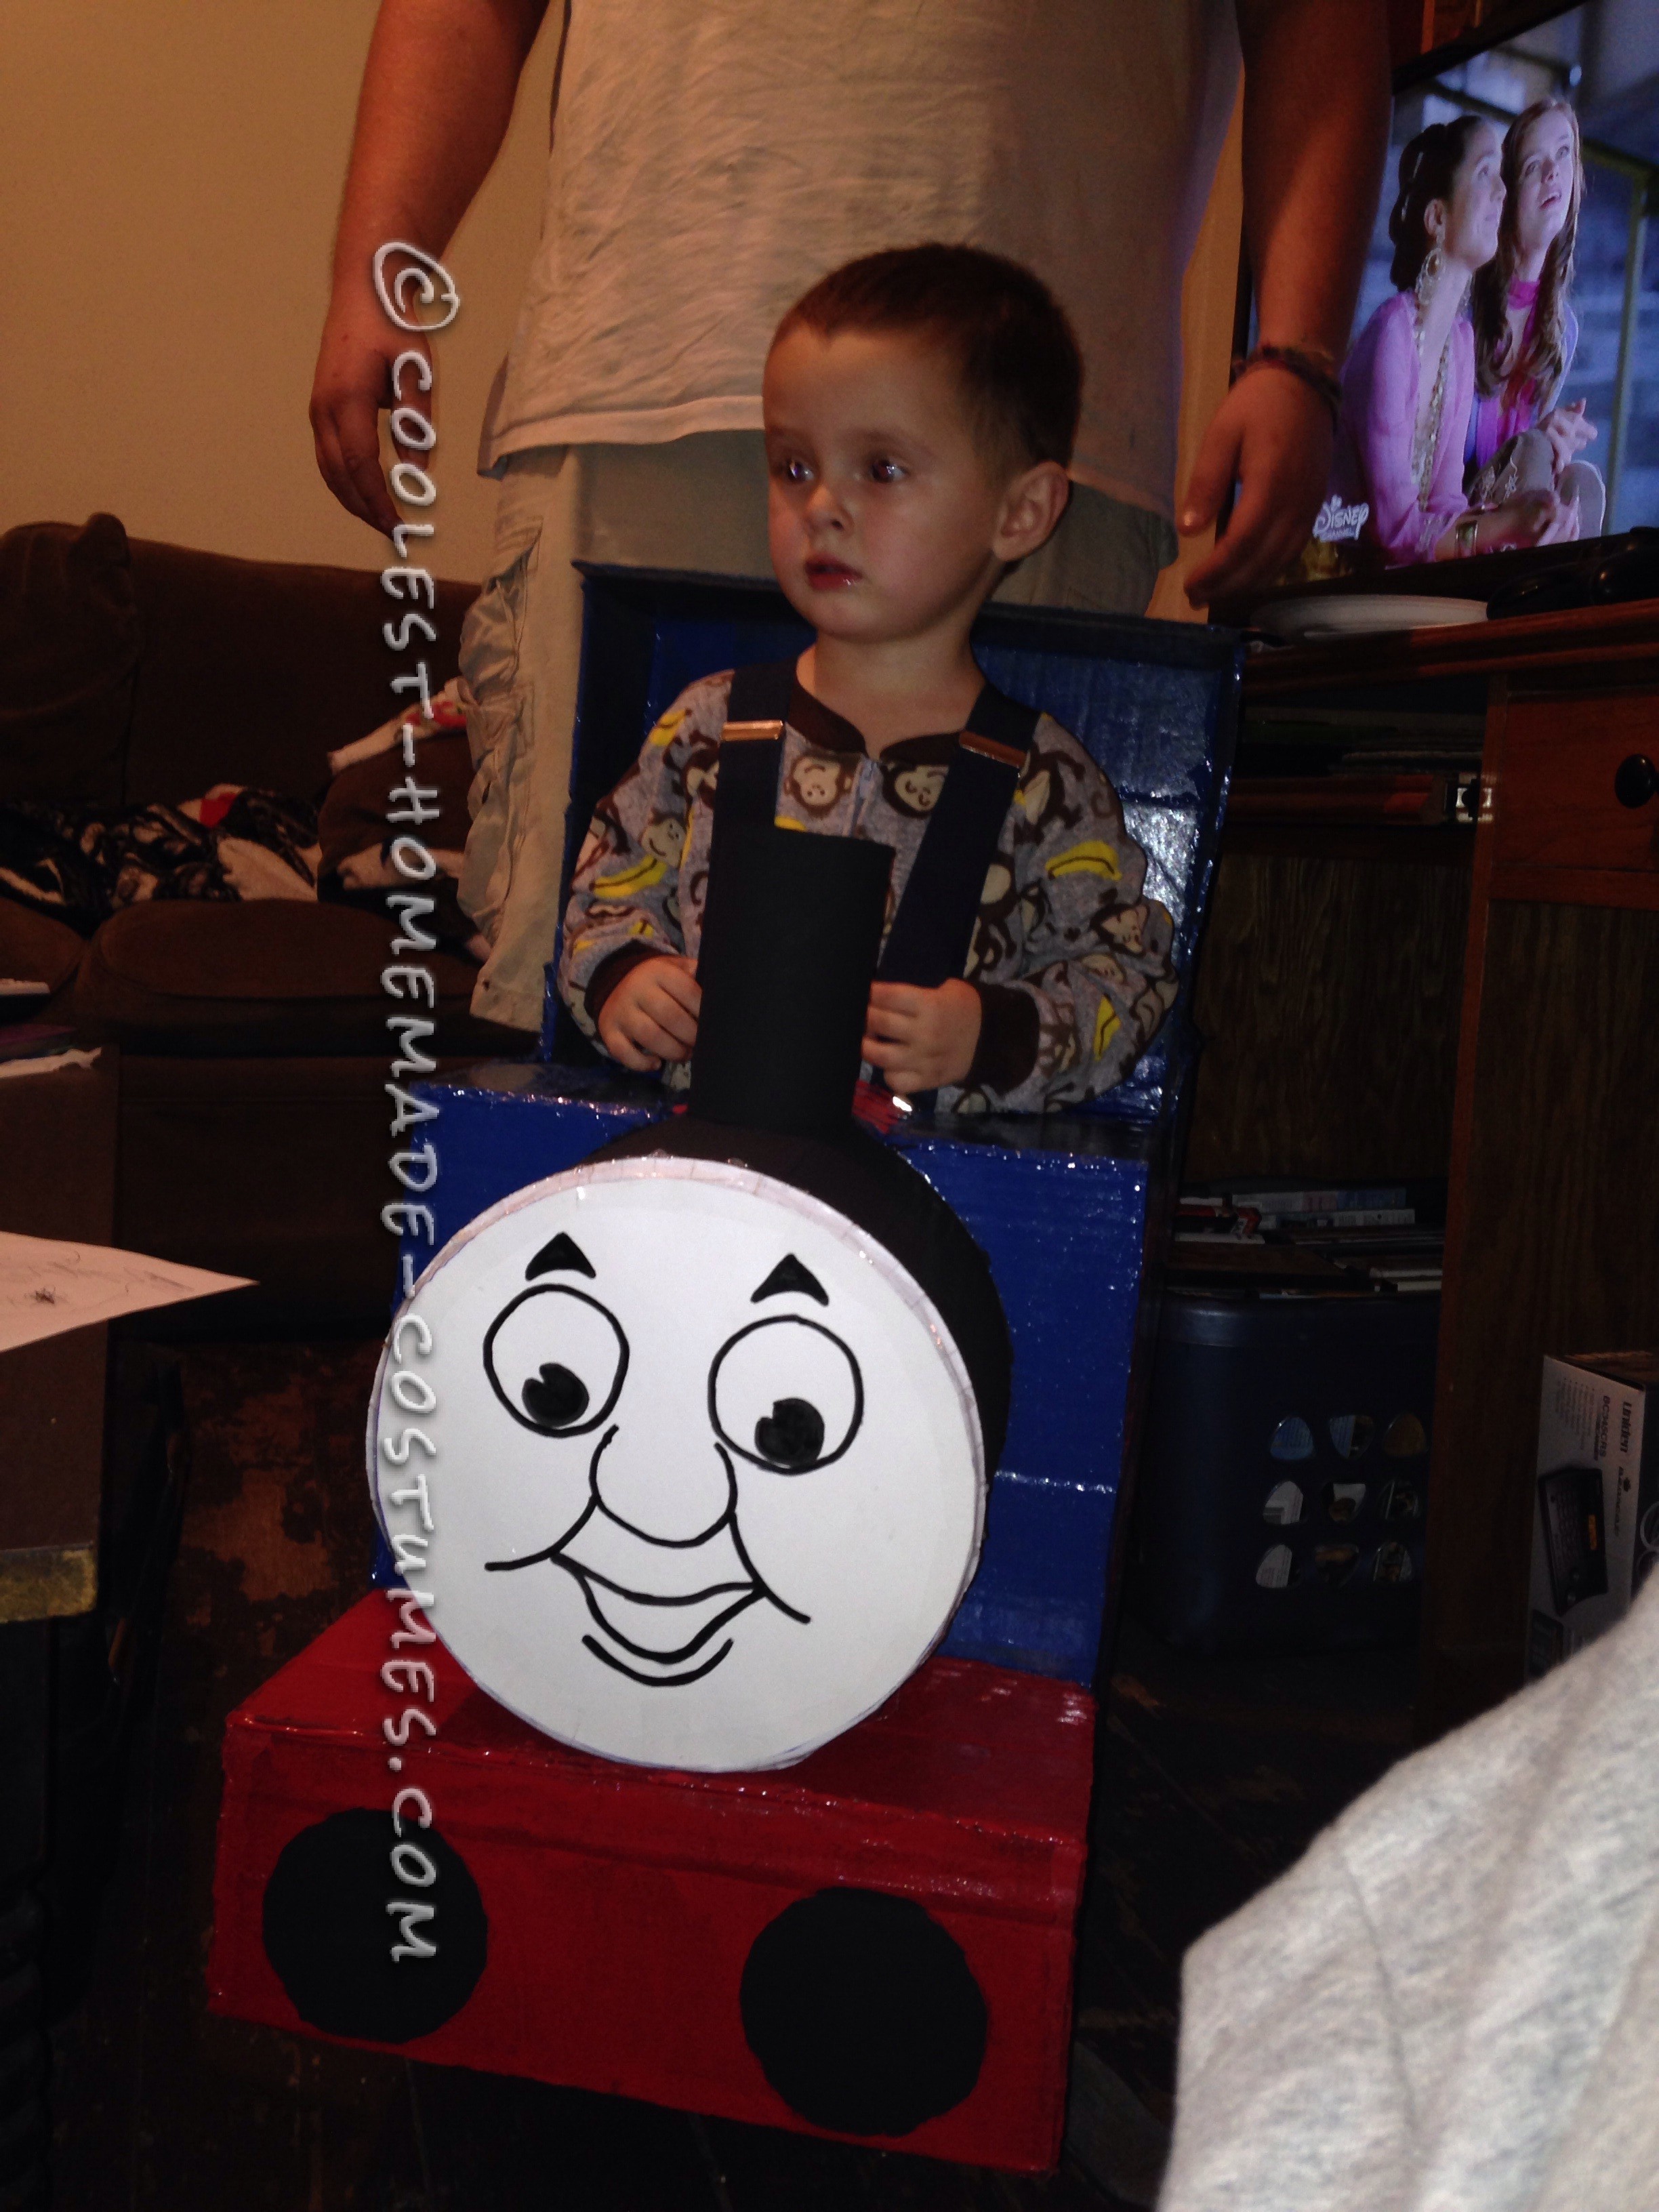 Toddler Thomas the Train Costume